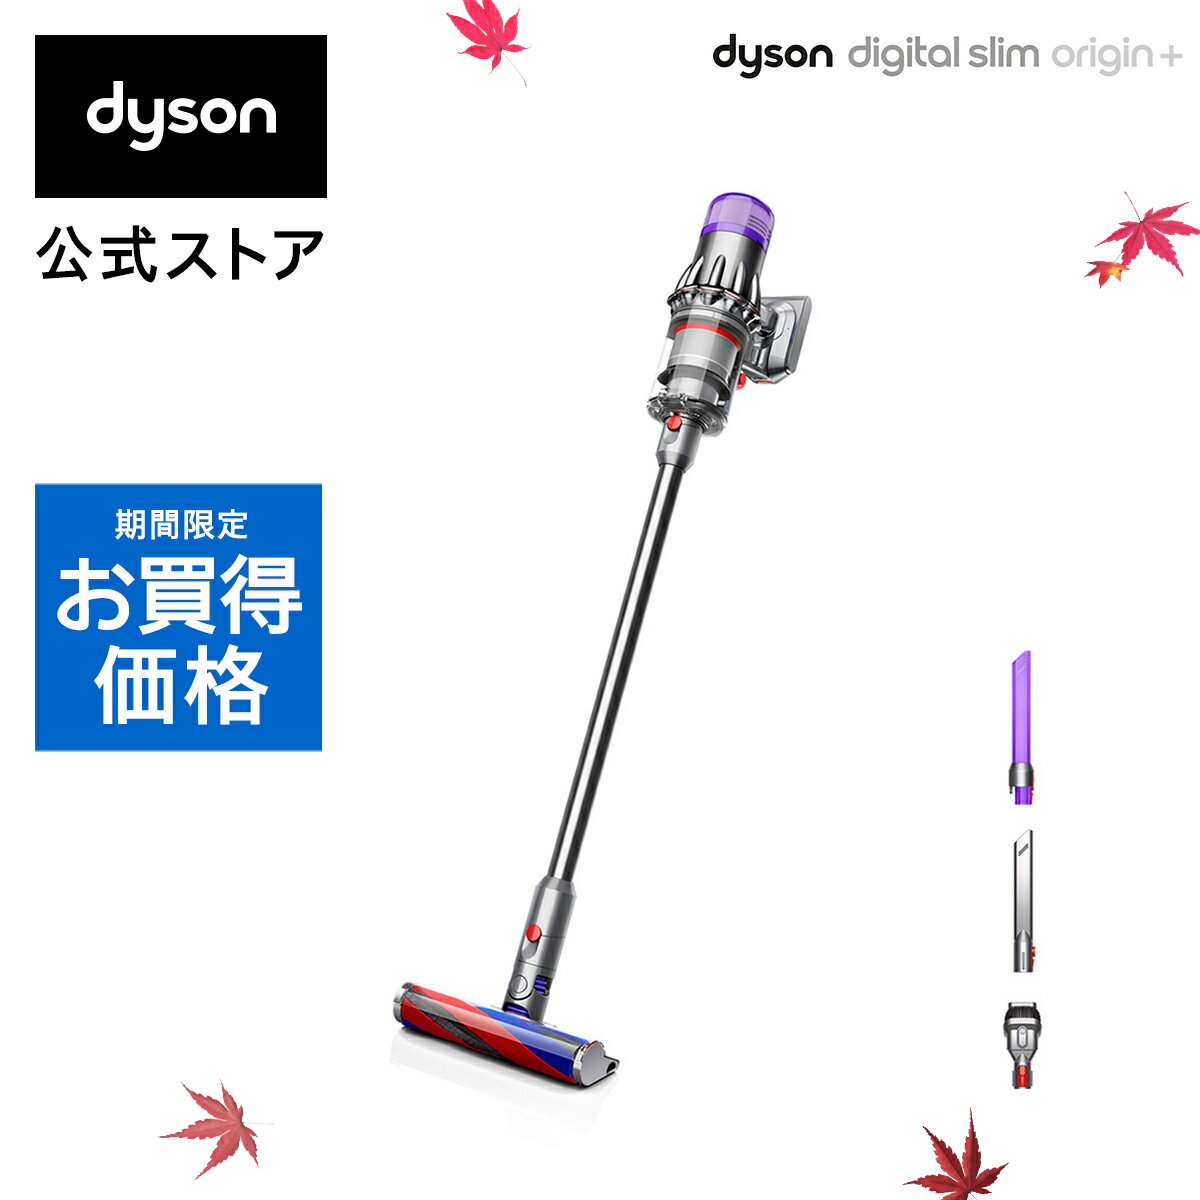   i  yʂŃpt  _C\ Dyson Digital Slim Origin Plus TCN R[hX|@ dyson SV18FFORCOM